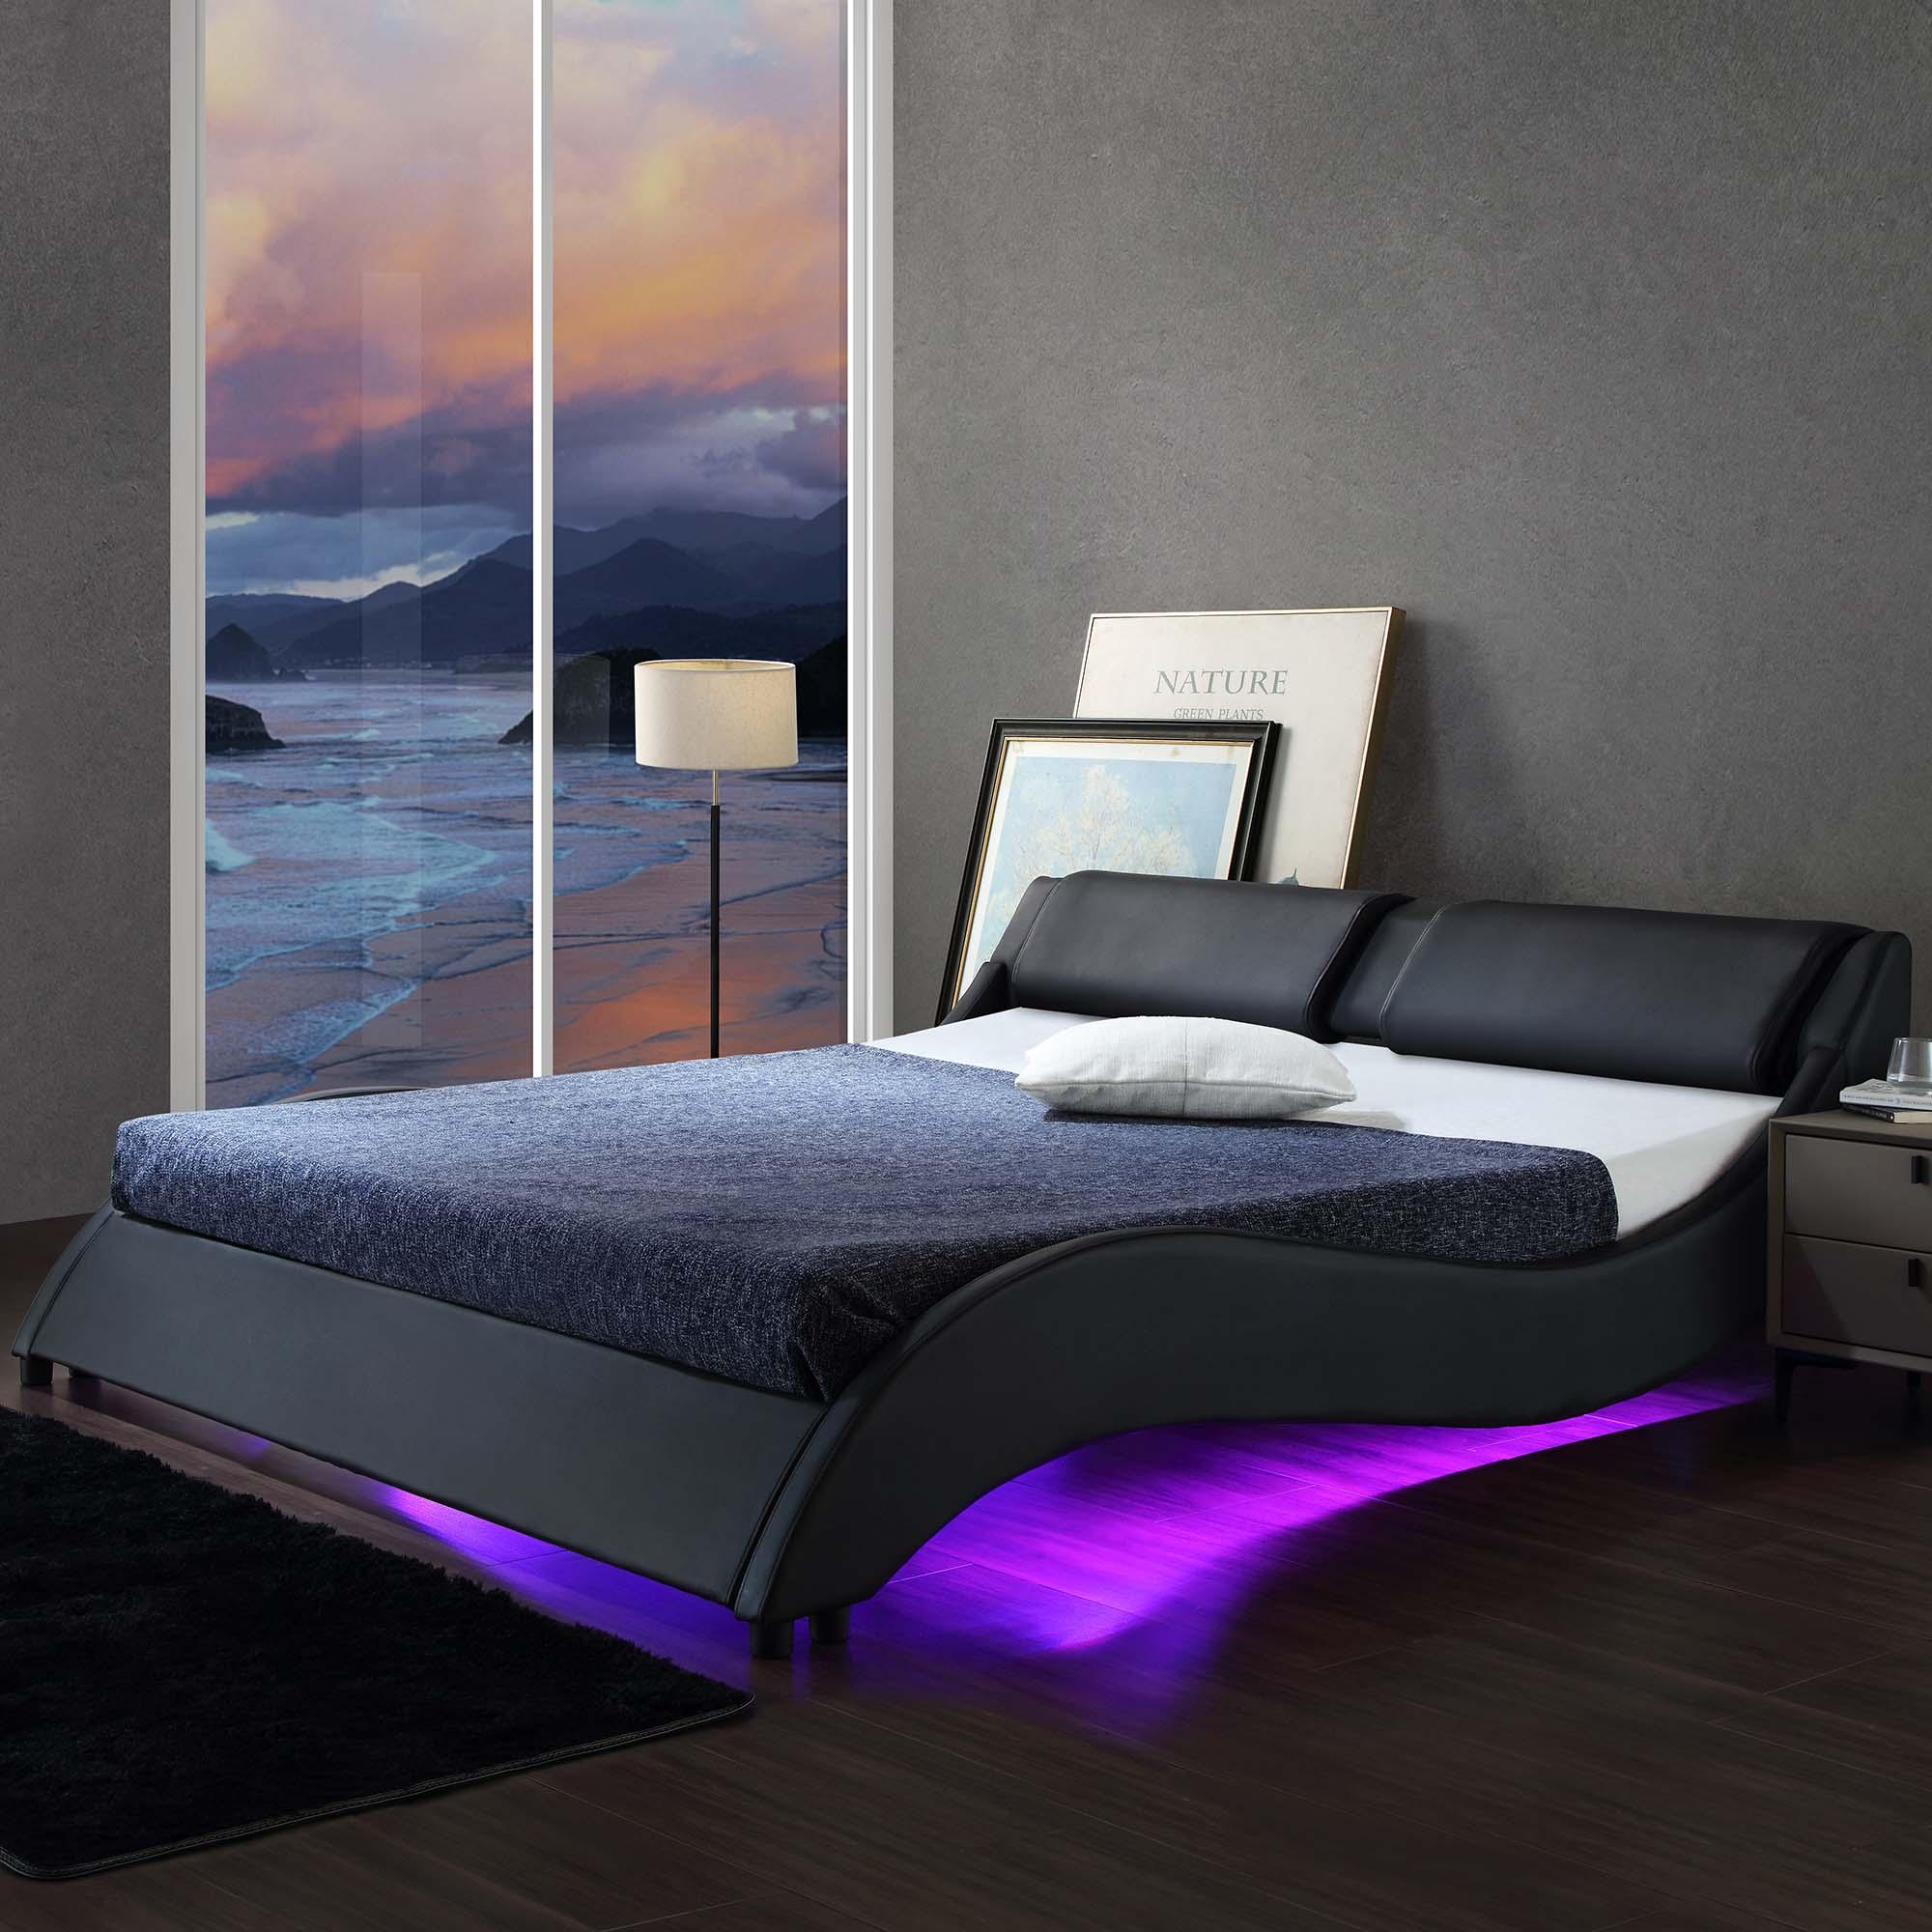 CORVUS Faux Leather Upholstered Bed Frame with Underbed LED Lights, Black